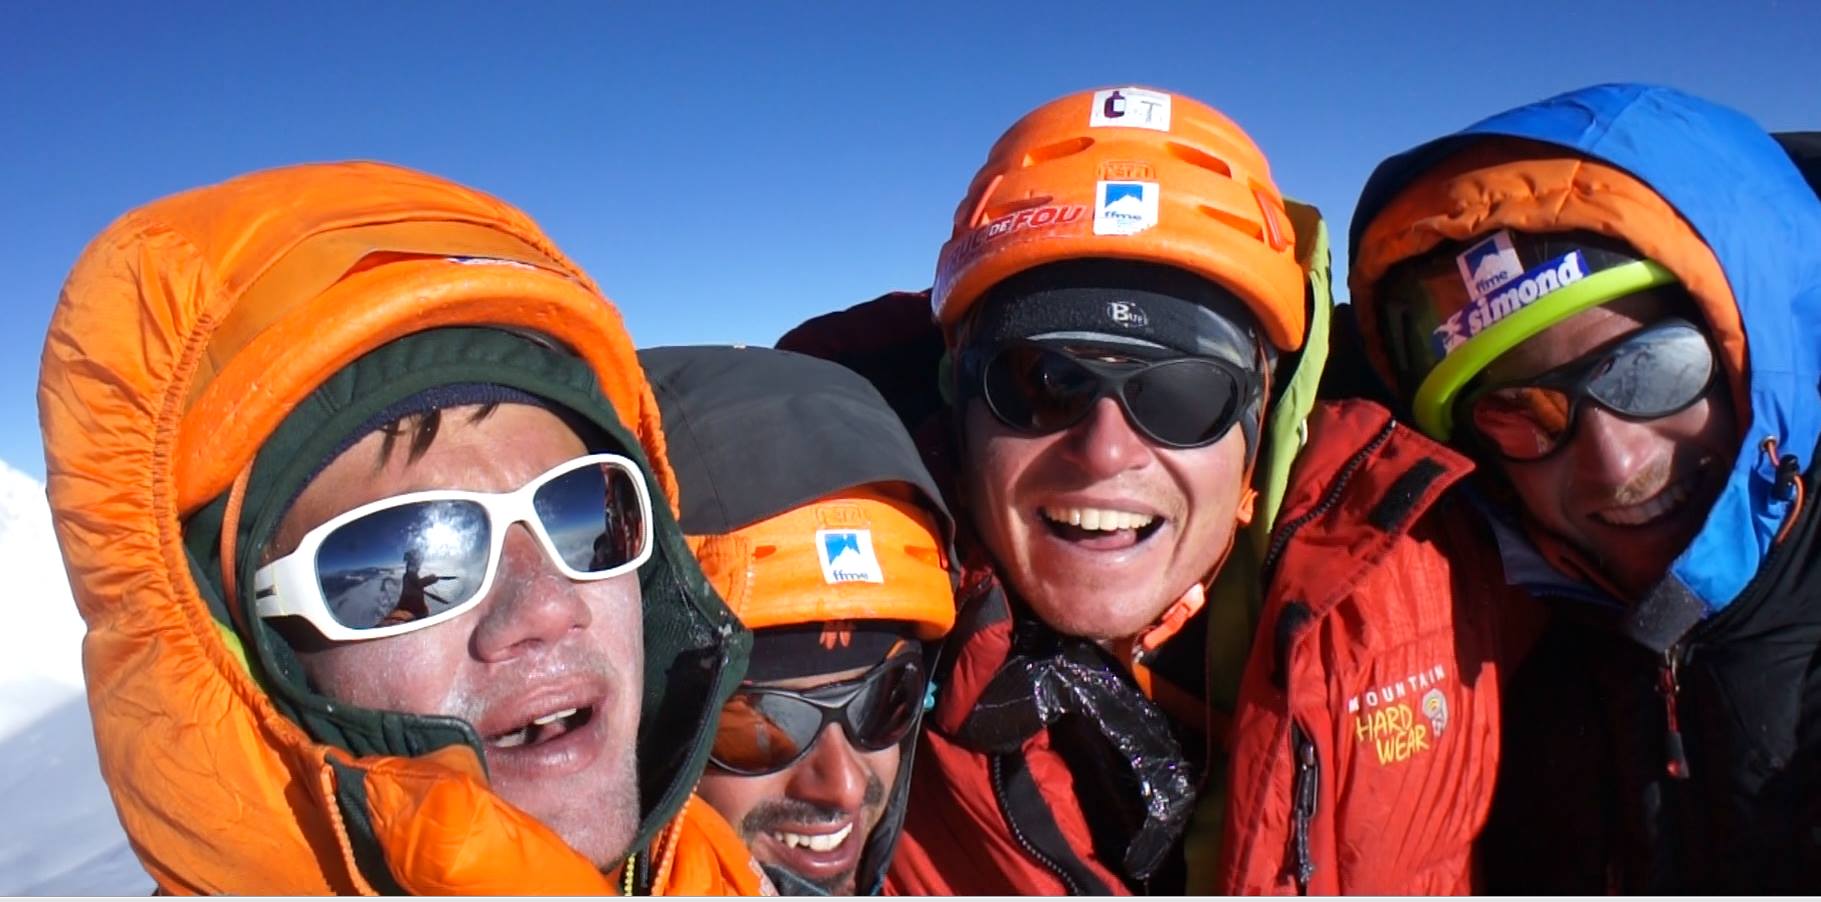  Экспедиция Gaurishankar project 2013: Mathieu Détrie, Mathieu Maynadier, Pierre Labbre и Jérôme Para. Фото на вершине пика Гауришанкар (Gaurishankar, 7134 м)